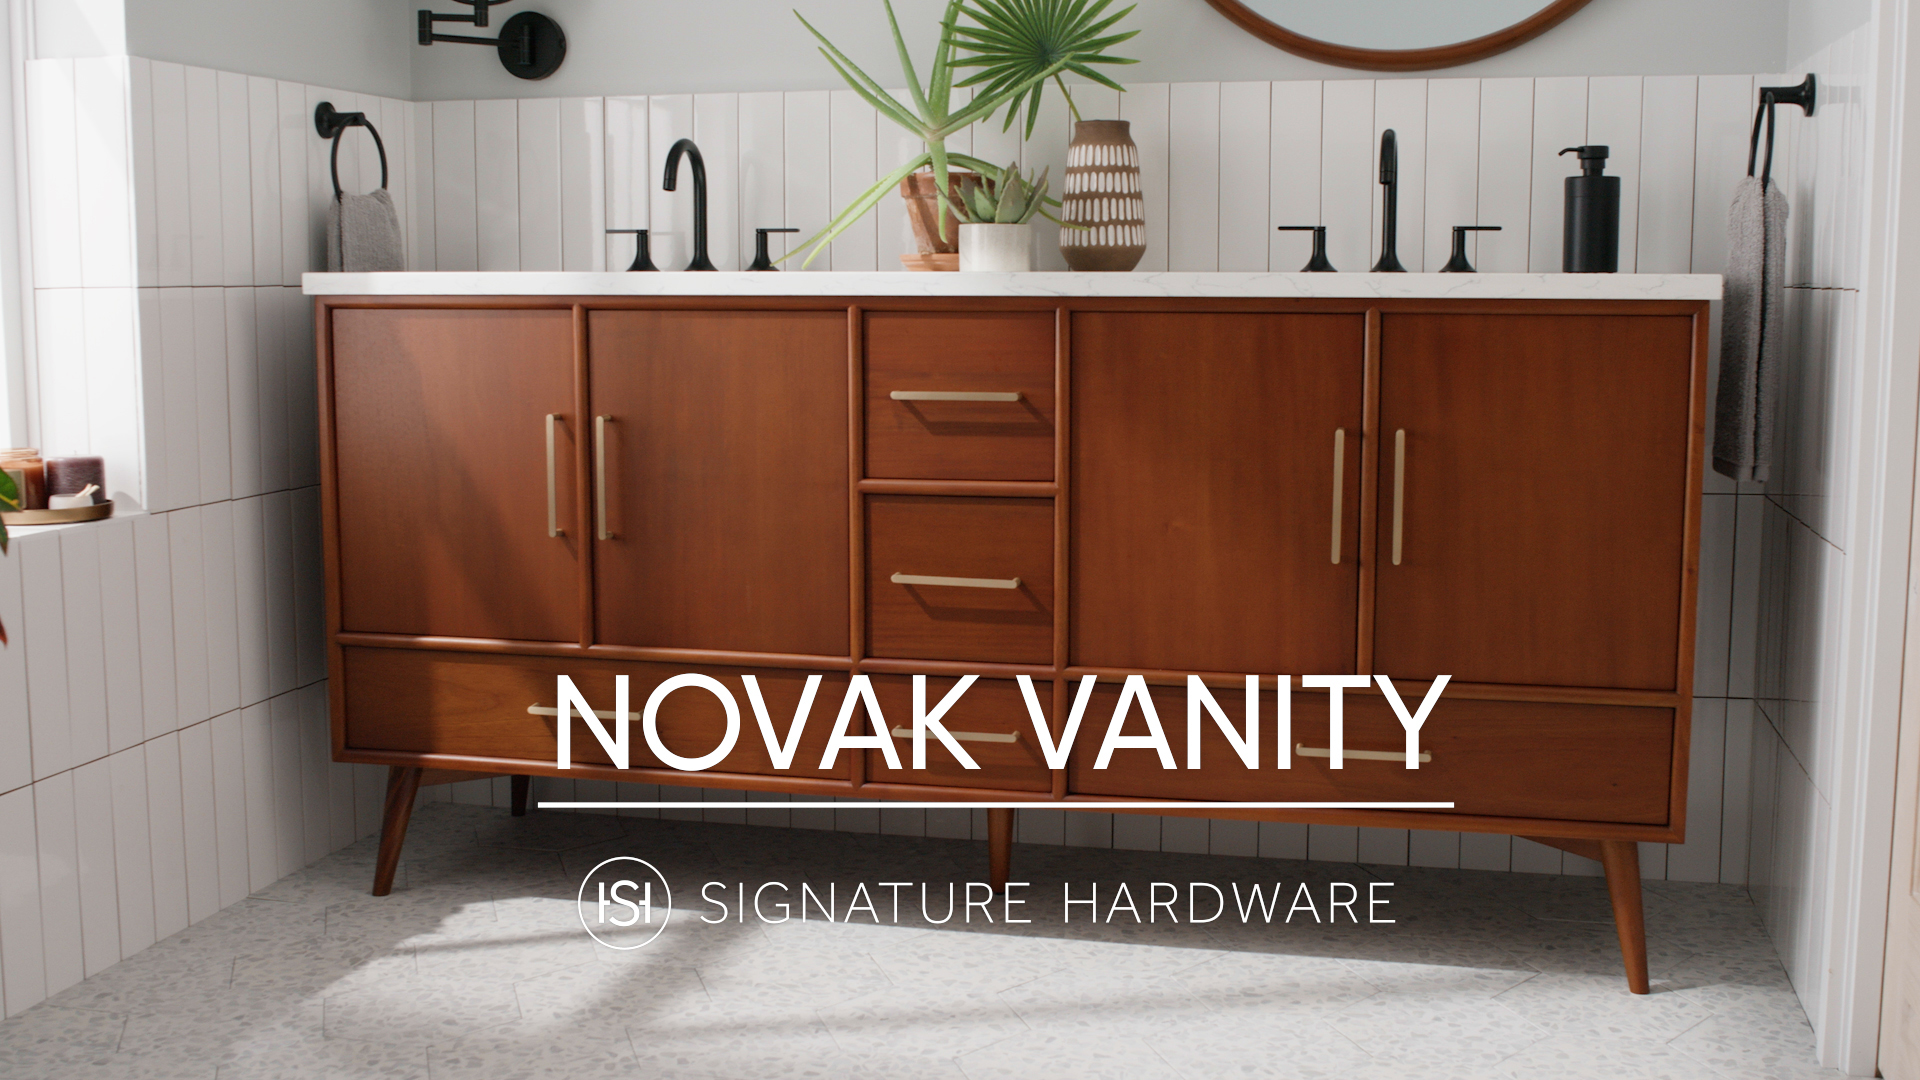 The Novak Vanity - A Mid-Century Modern Statement Piece